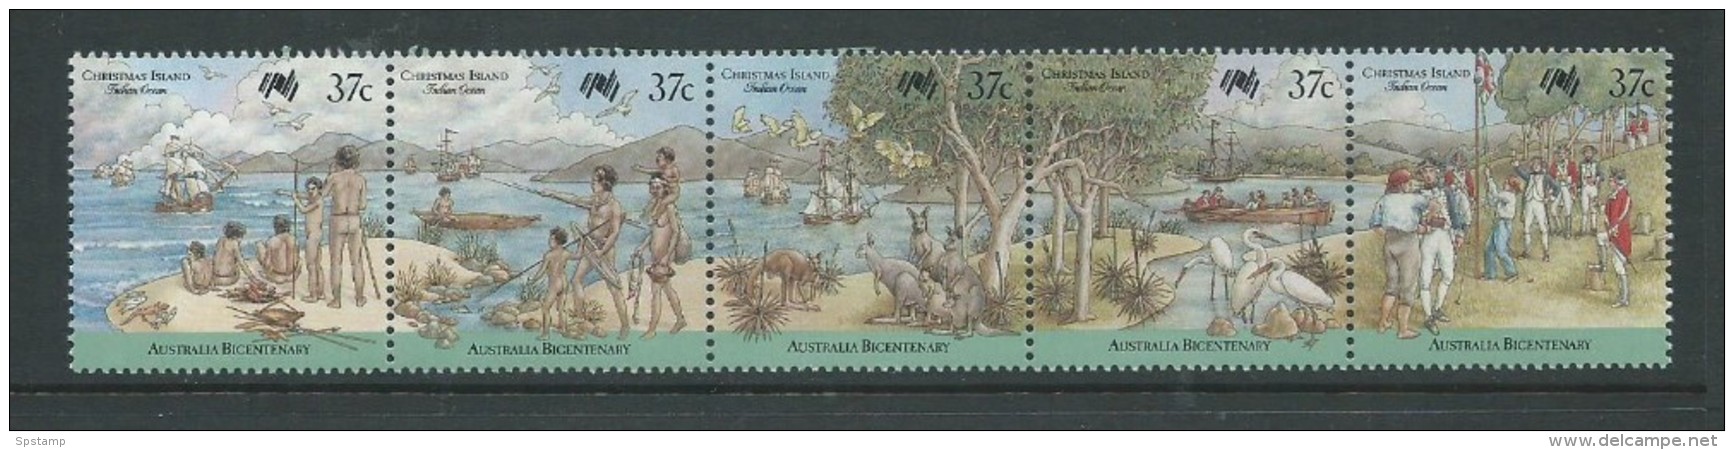 Christmas Island 1988 Australia Bicentennial Strip Of 5 MNH - Christmas Island